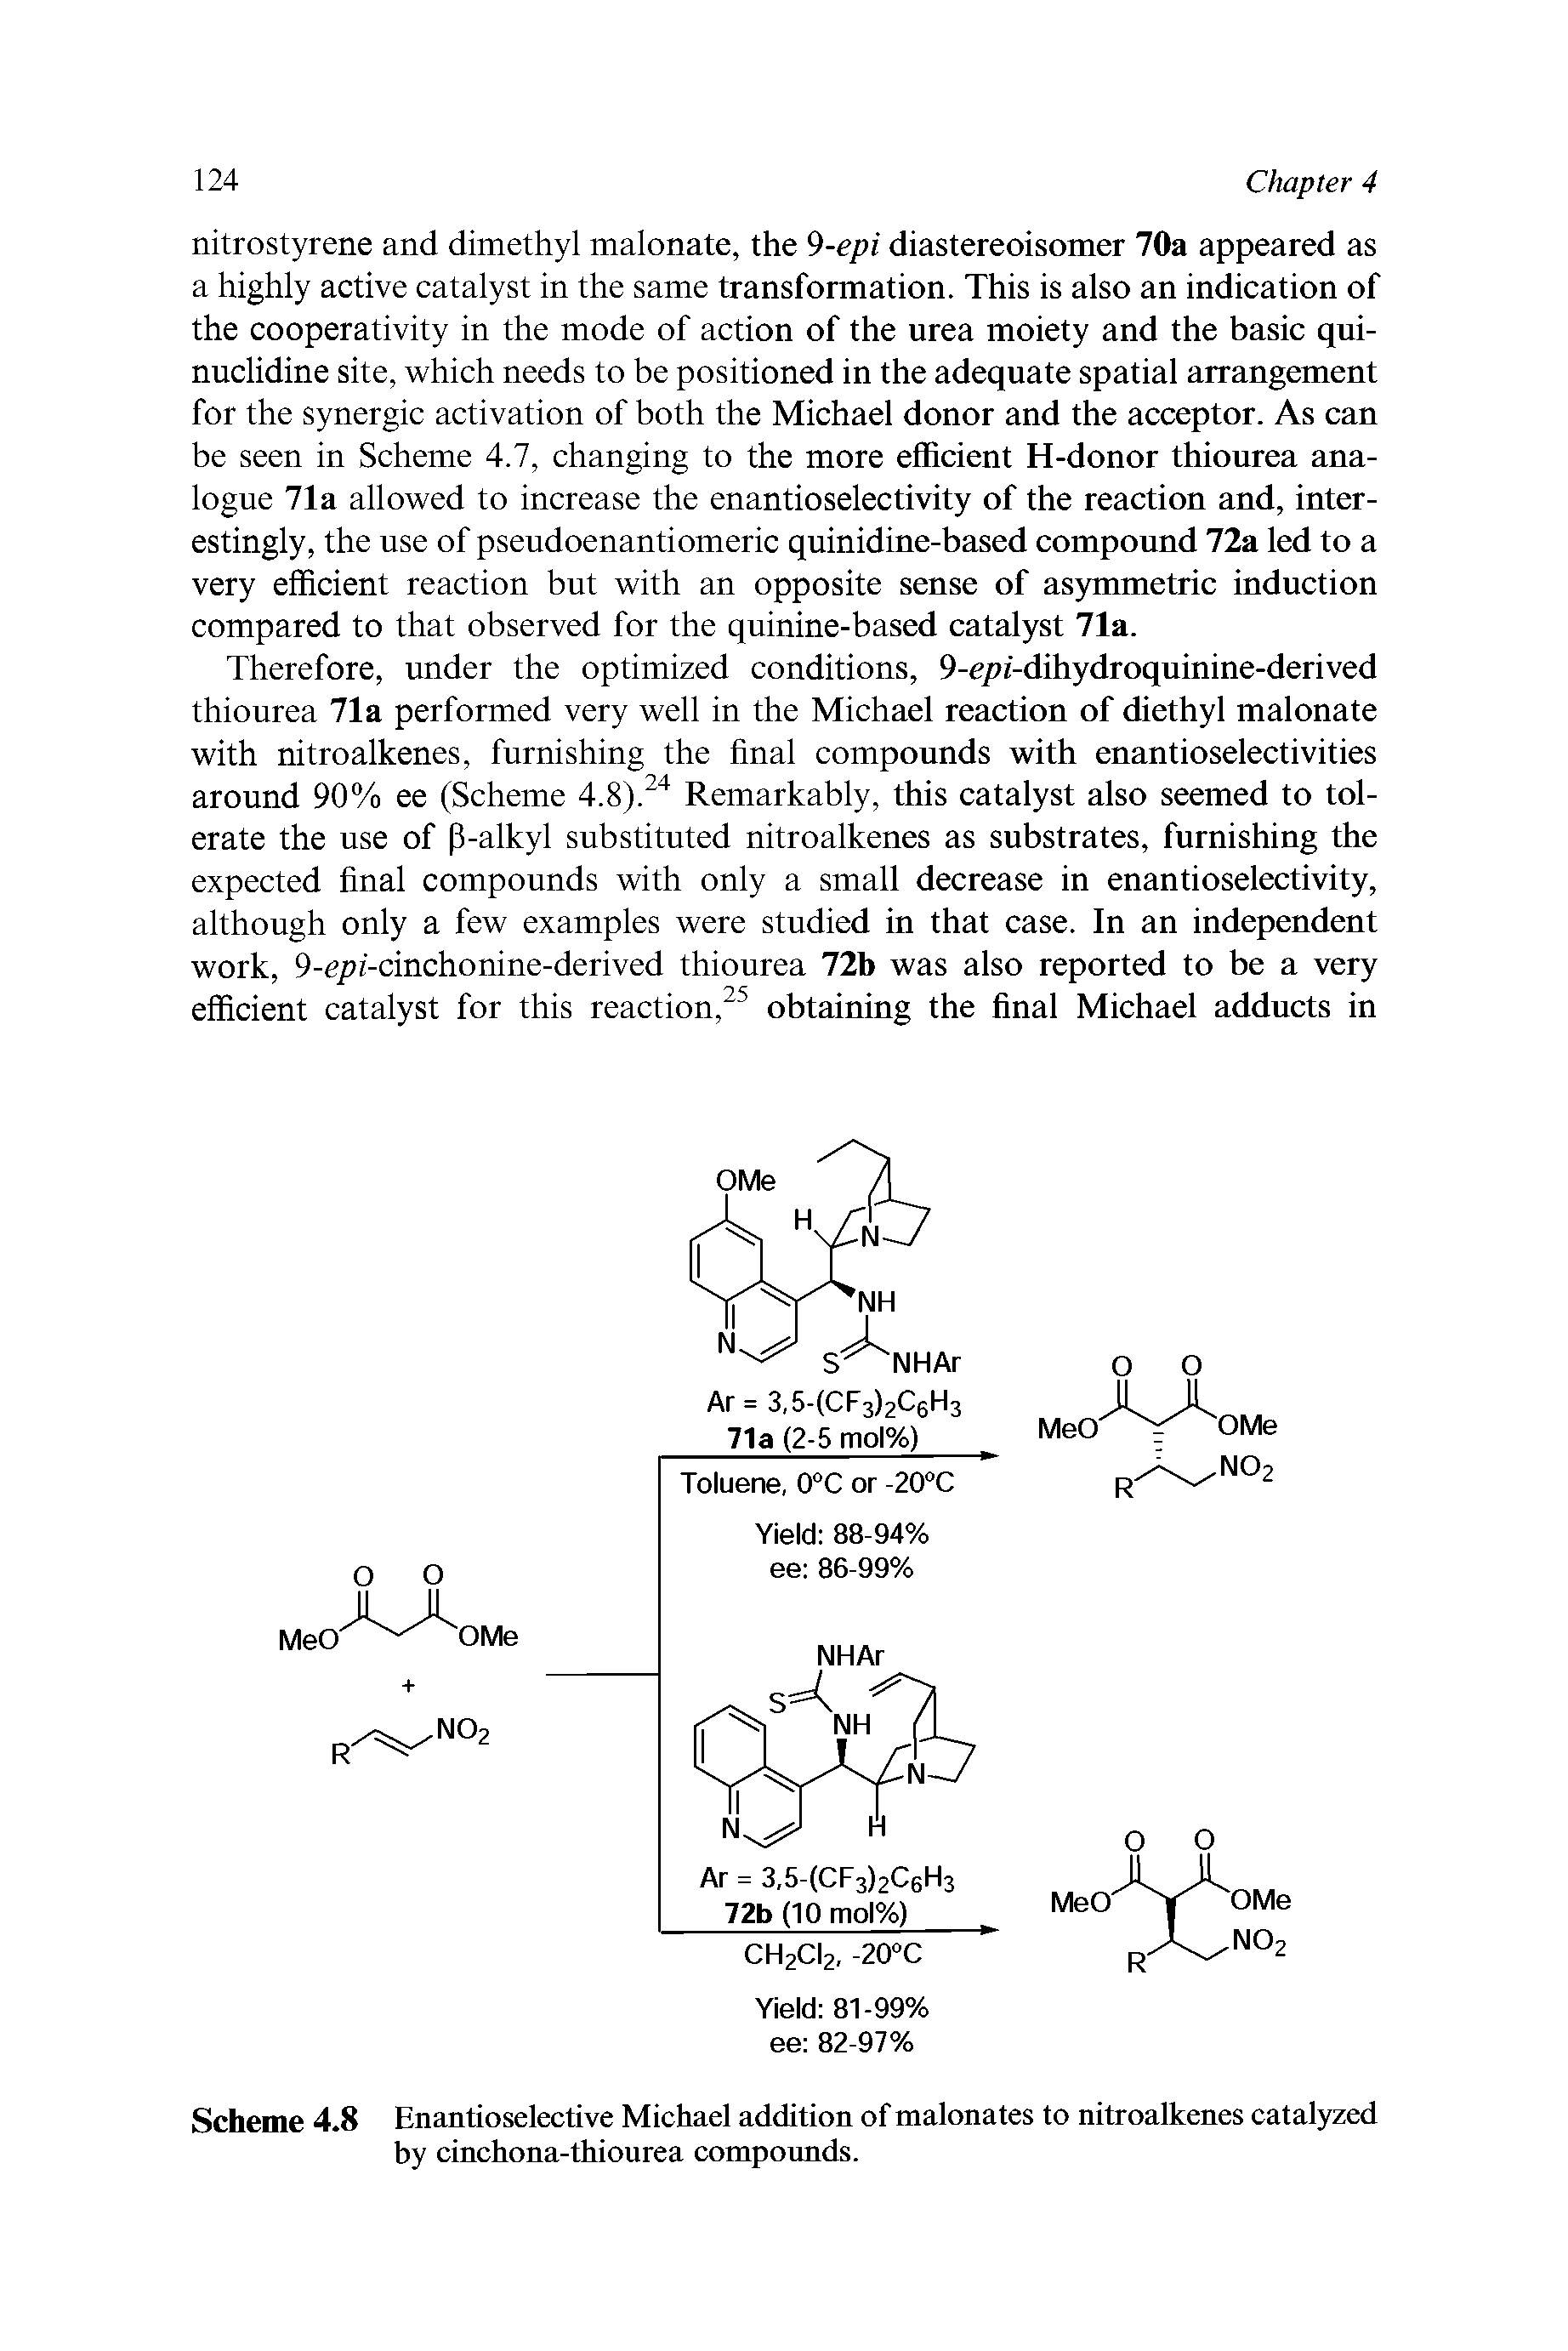 Scheme 4.8 Enantioselective Michael addition of malonates to nitroalkenes catalyzed by cinchona-thiourea compounds.